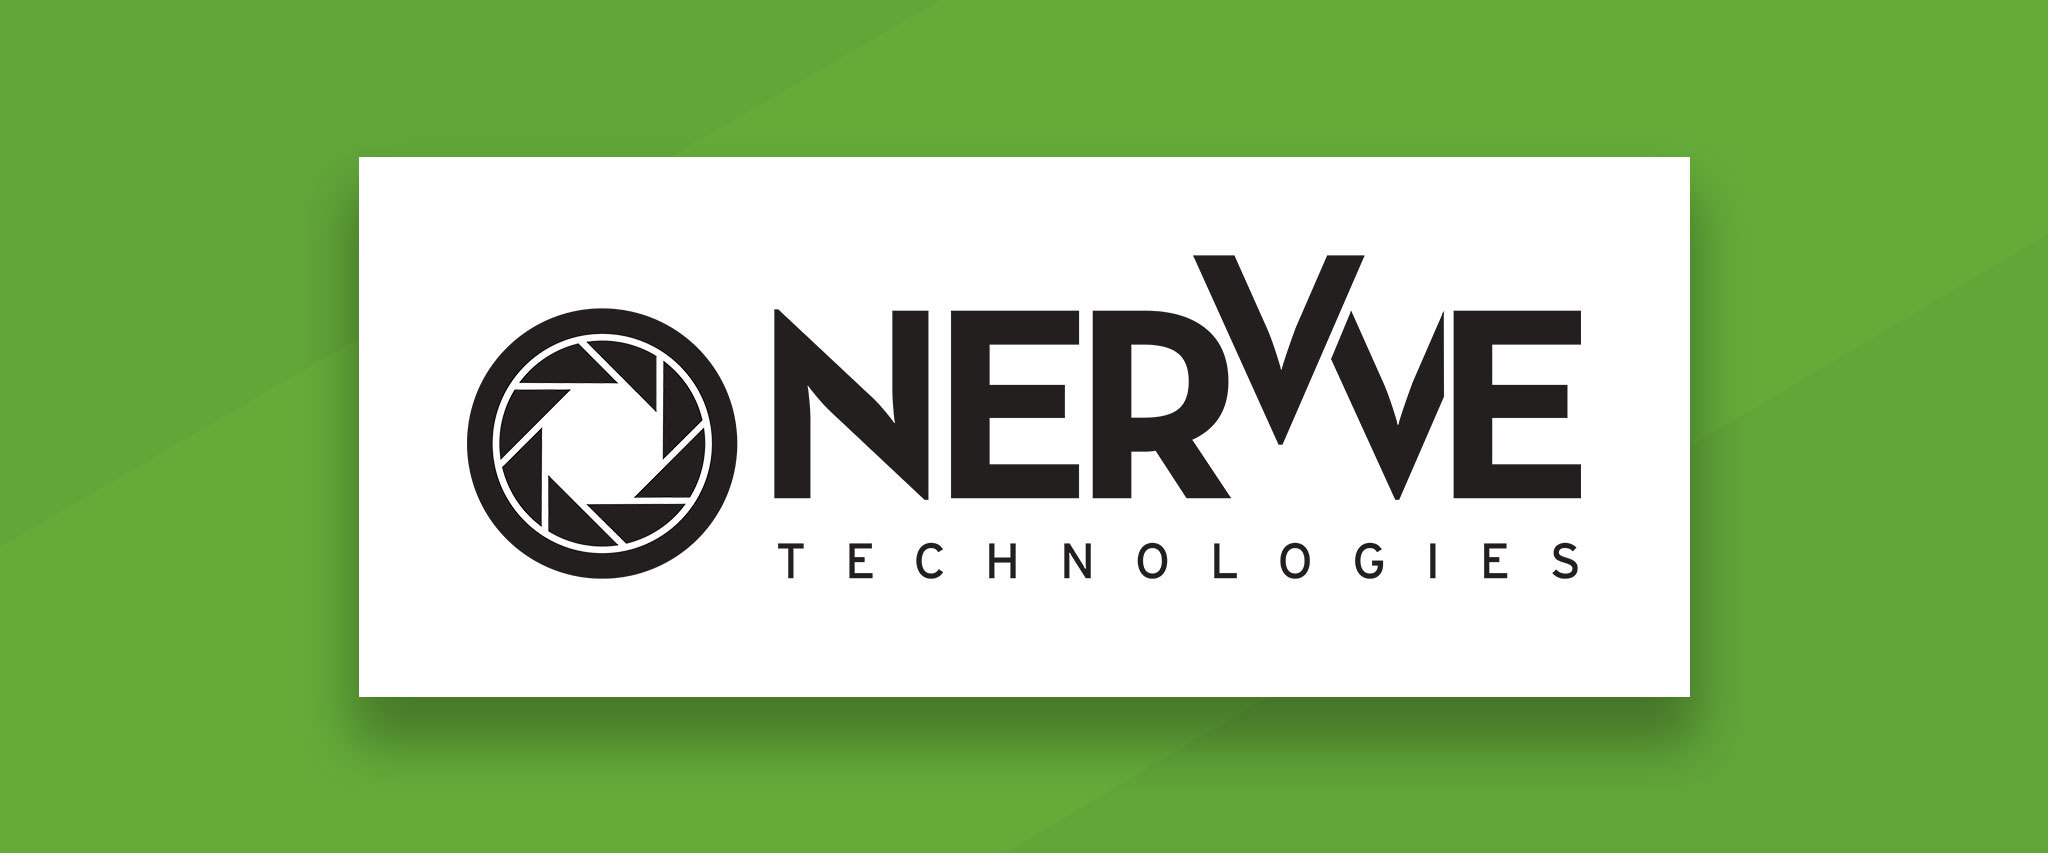 Nervve Technologies Gallery